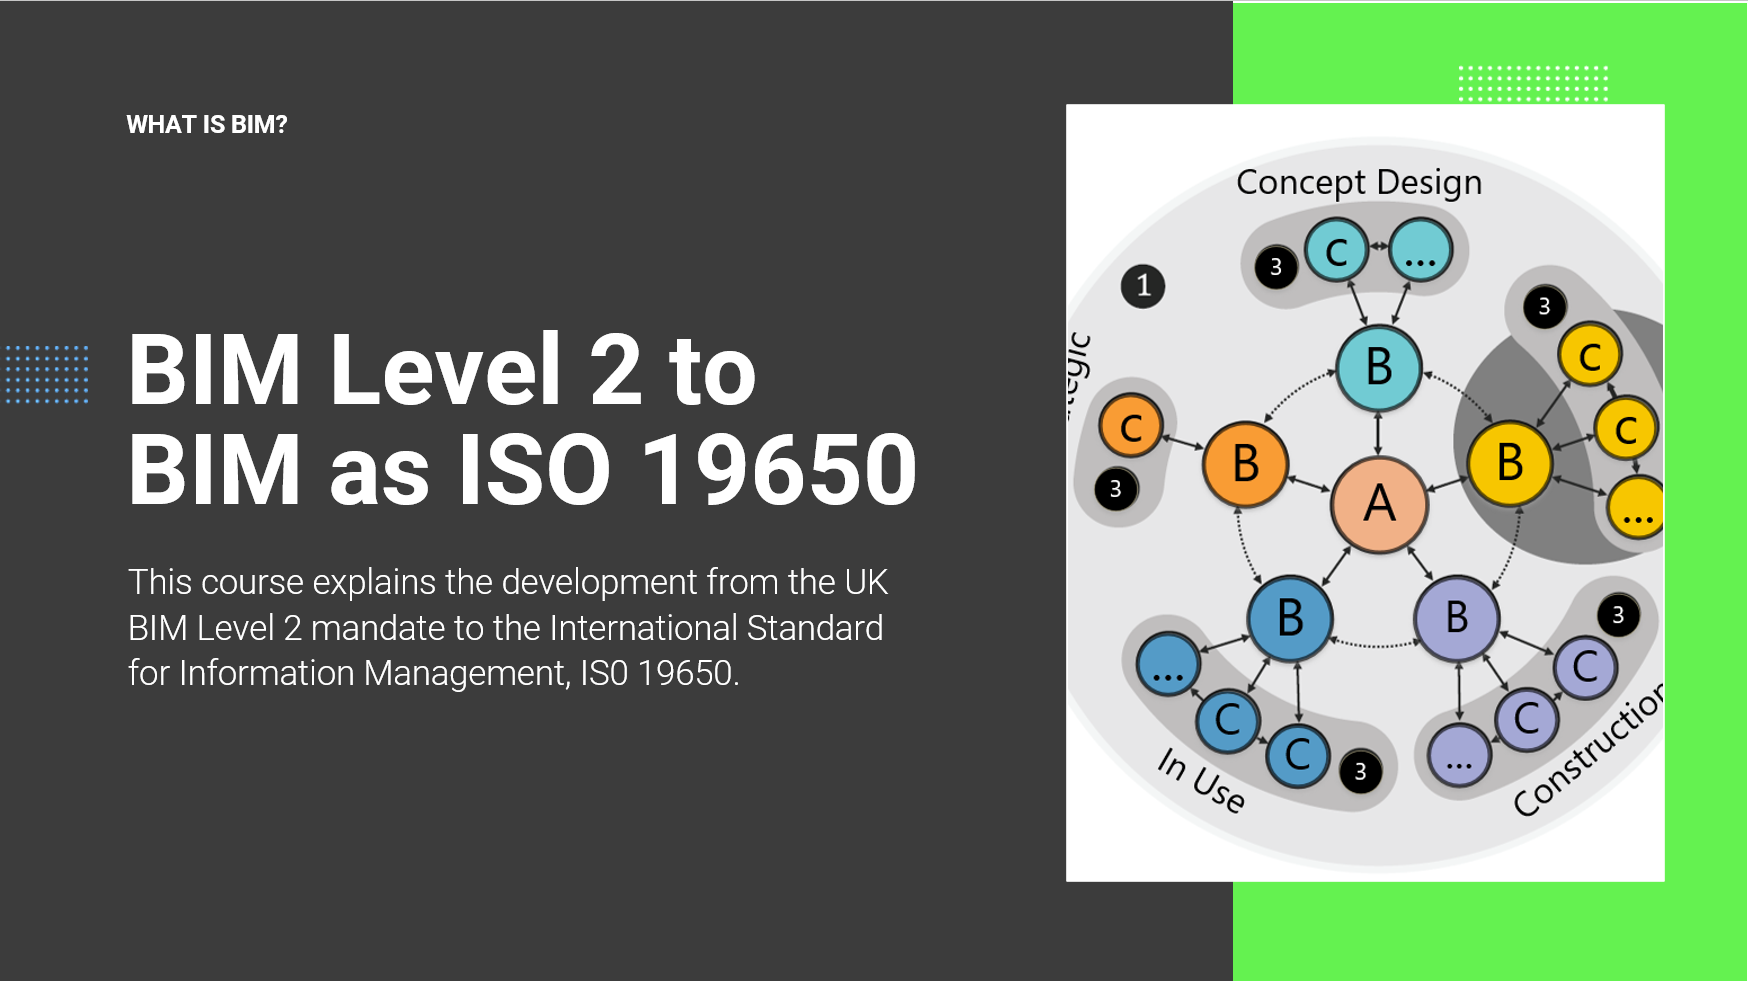 BIM Level 2 to BIM as ISO 19650